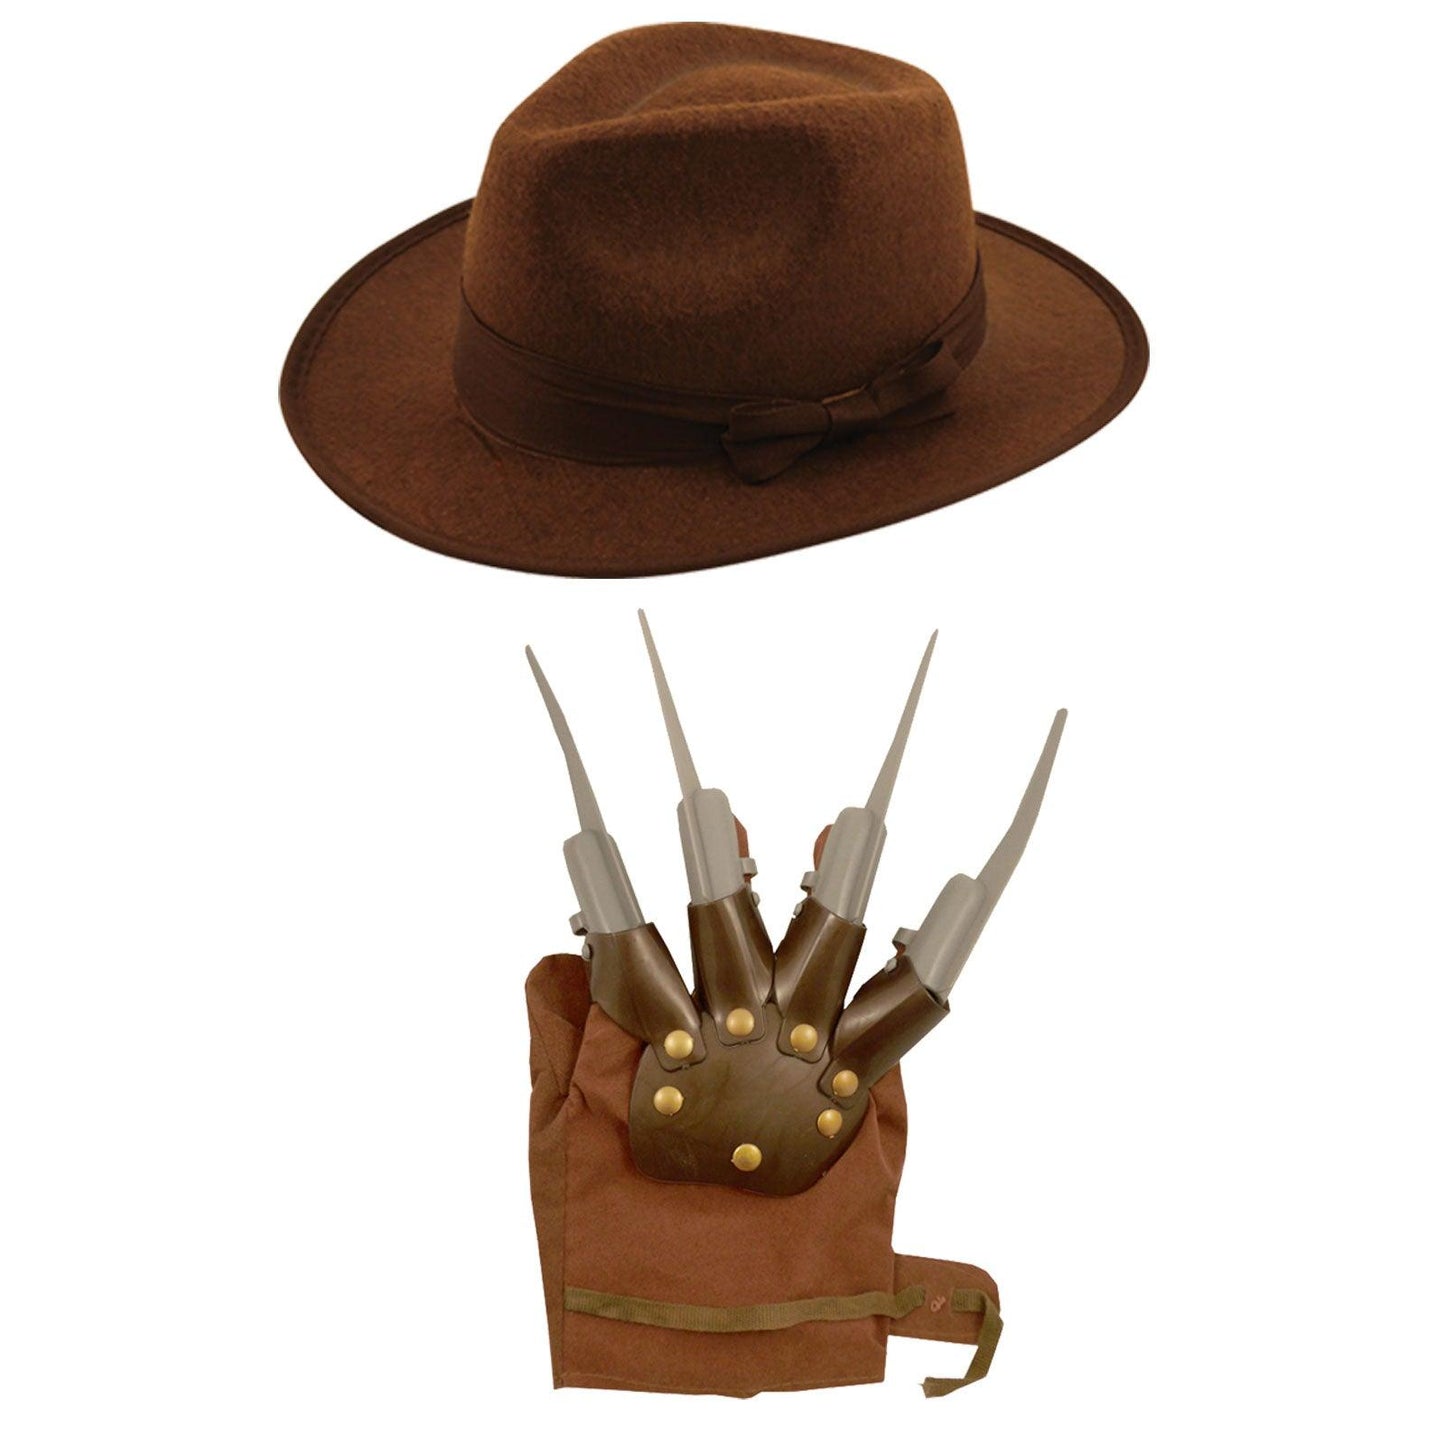 Explorer Hat Brown Claw Hand Glove Freddy Style Kids Boys Halloween Fancy Dress Party Explorer Costume Set - Labreeze